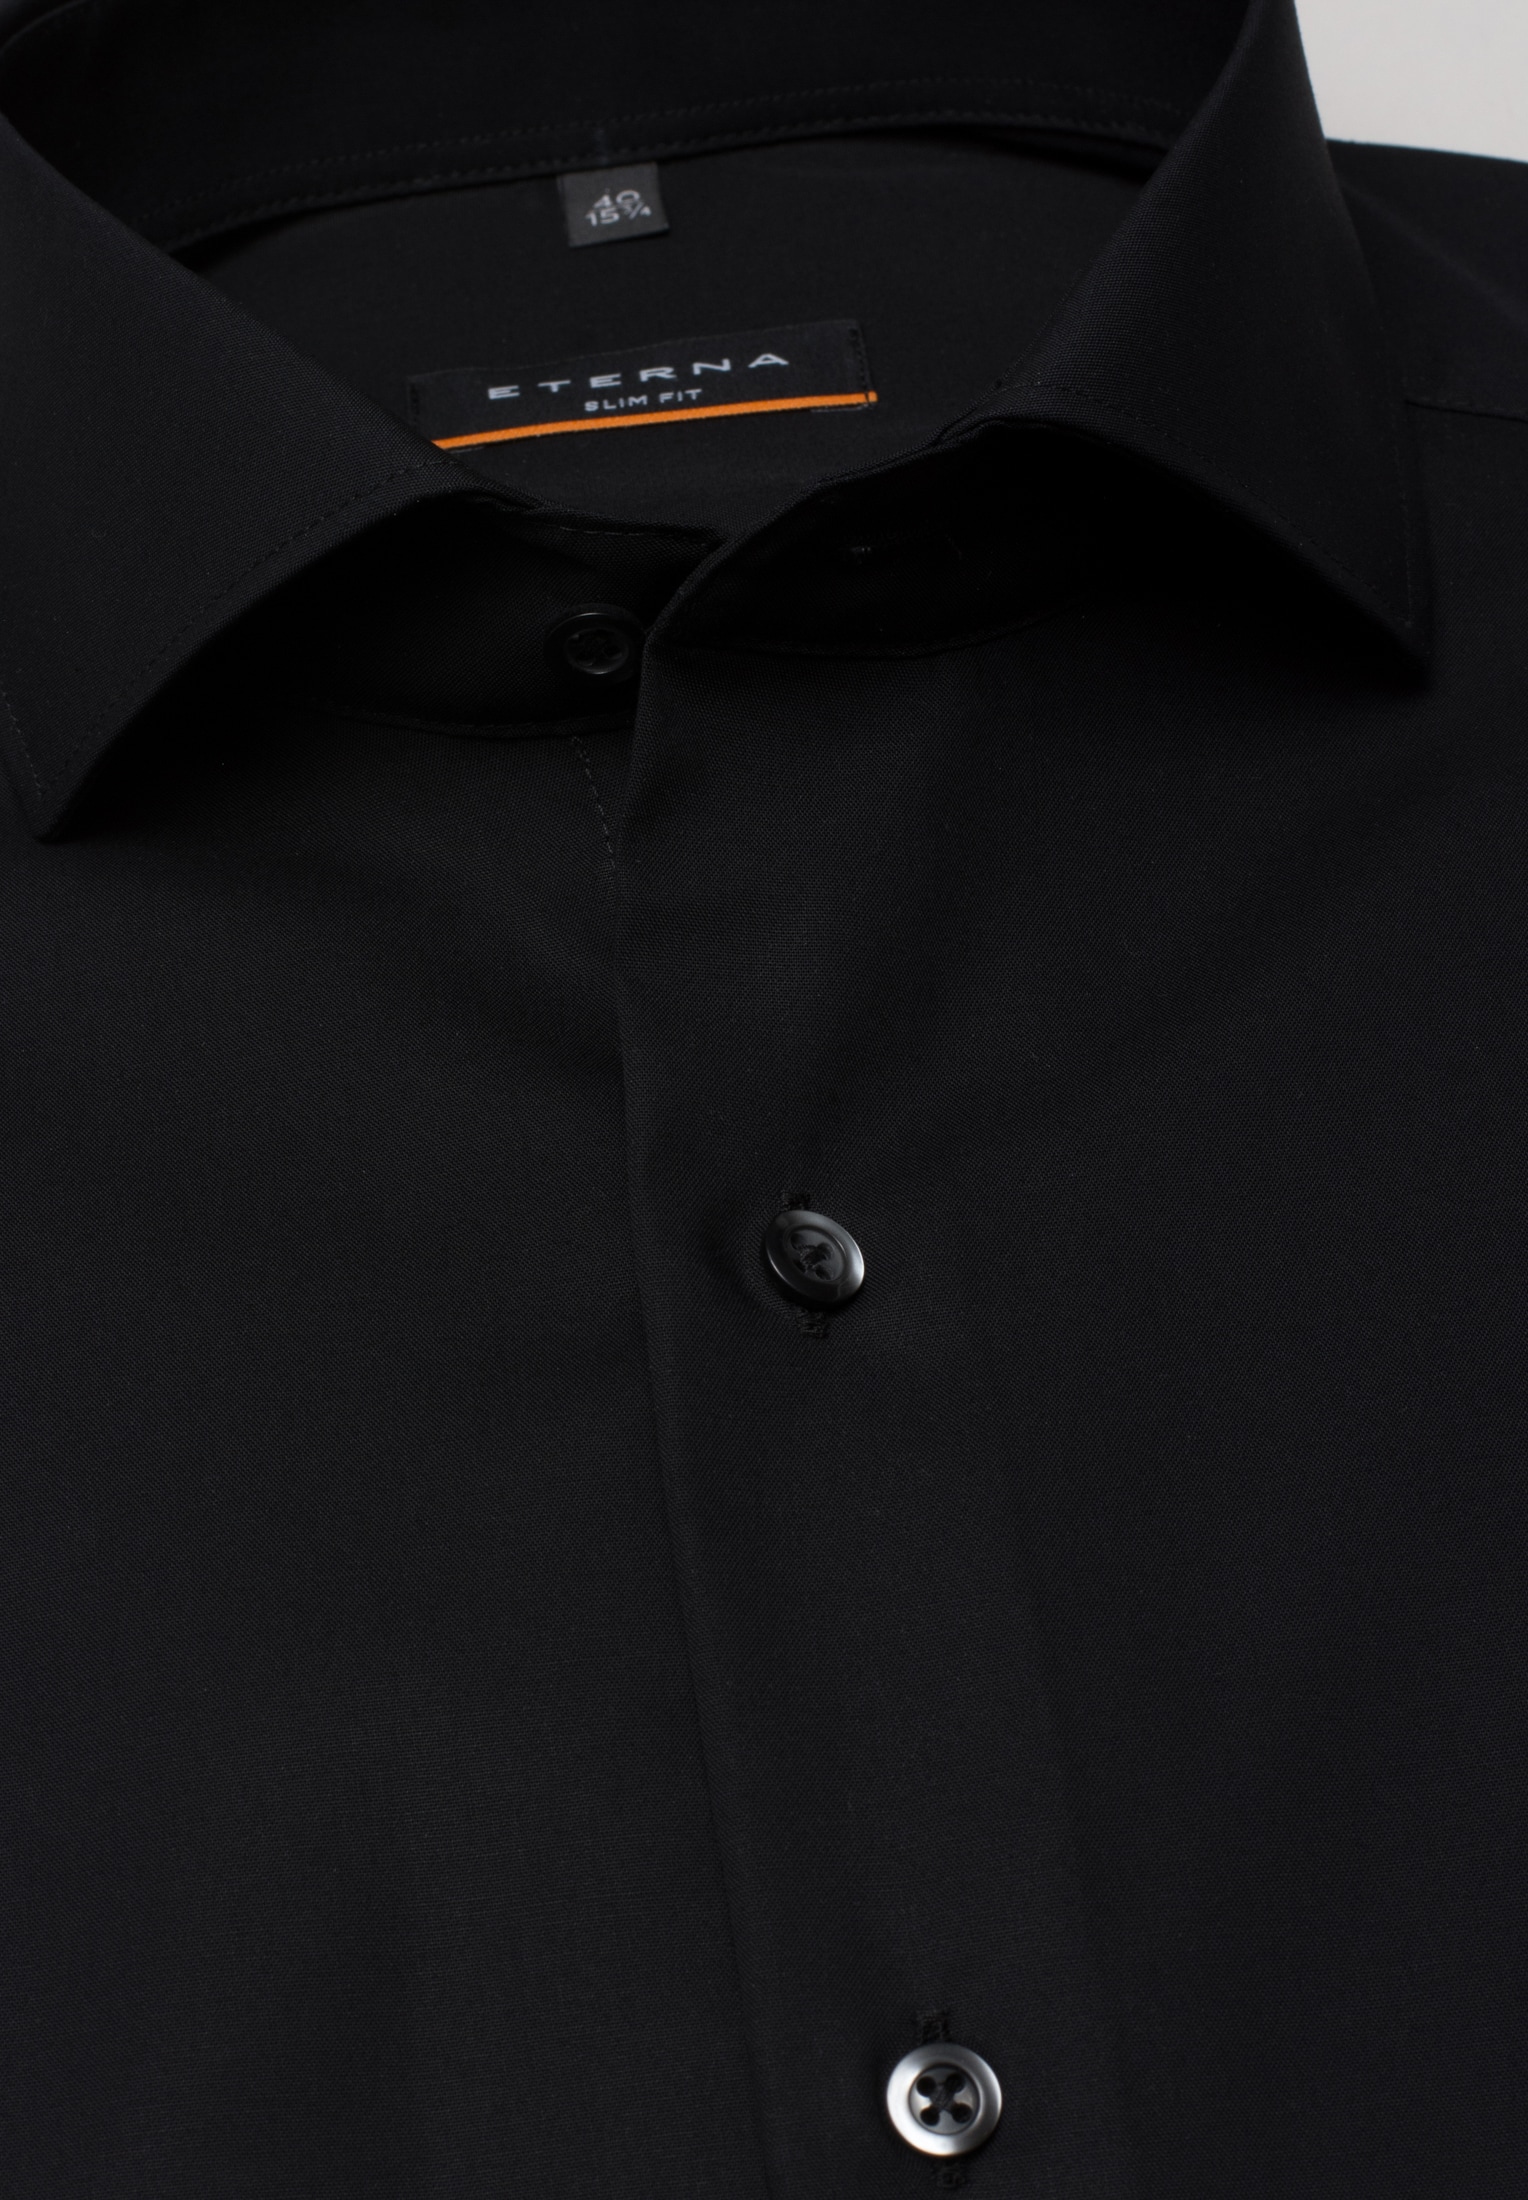 SLIM FIT Original Shirt in schwarz unifarben | schwarz | 37 | Langarm |  1SH00102-03-91-37-1/1